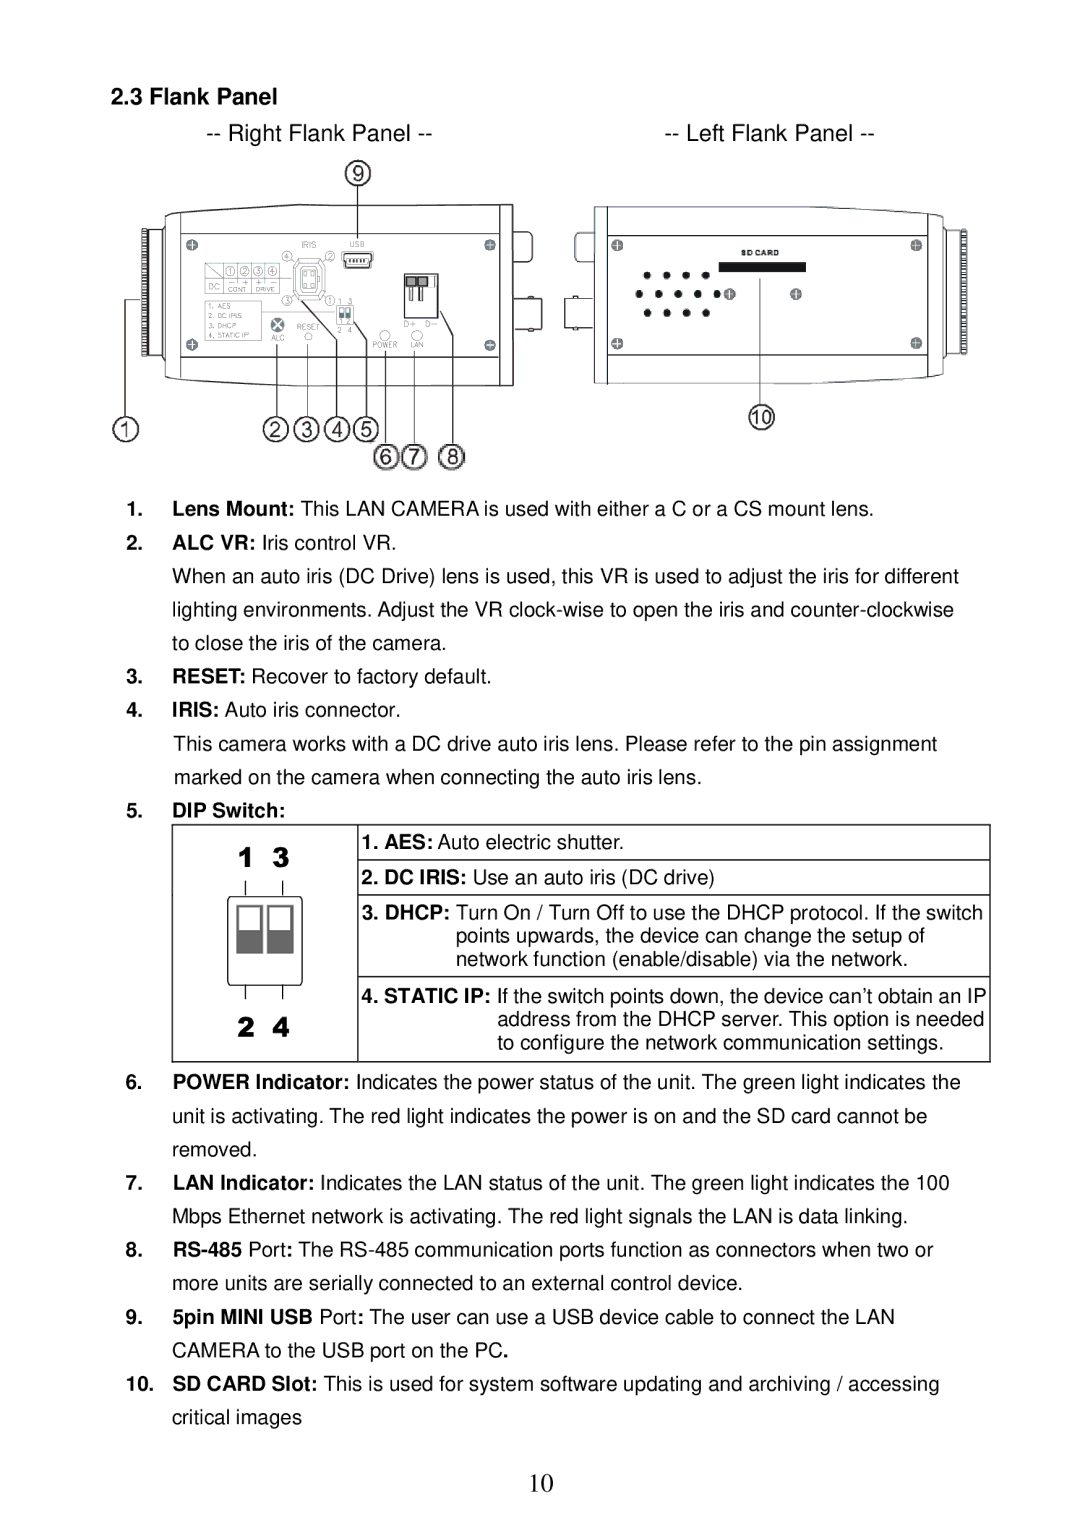 Sony MPEG4 LAN Camera operation manual Flank Panel, DIP Switch 